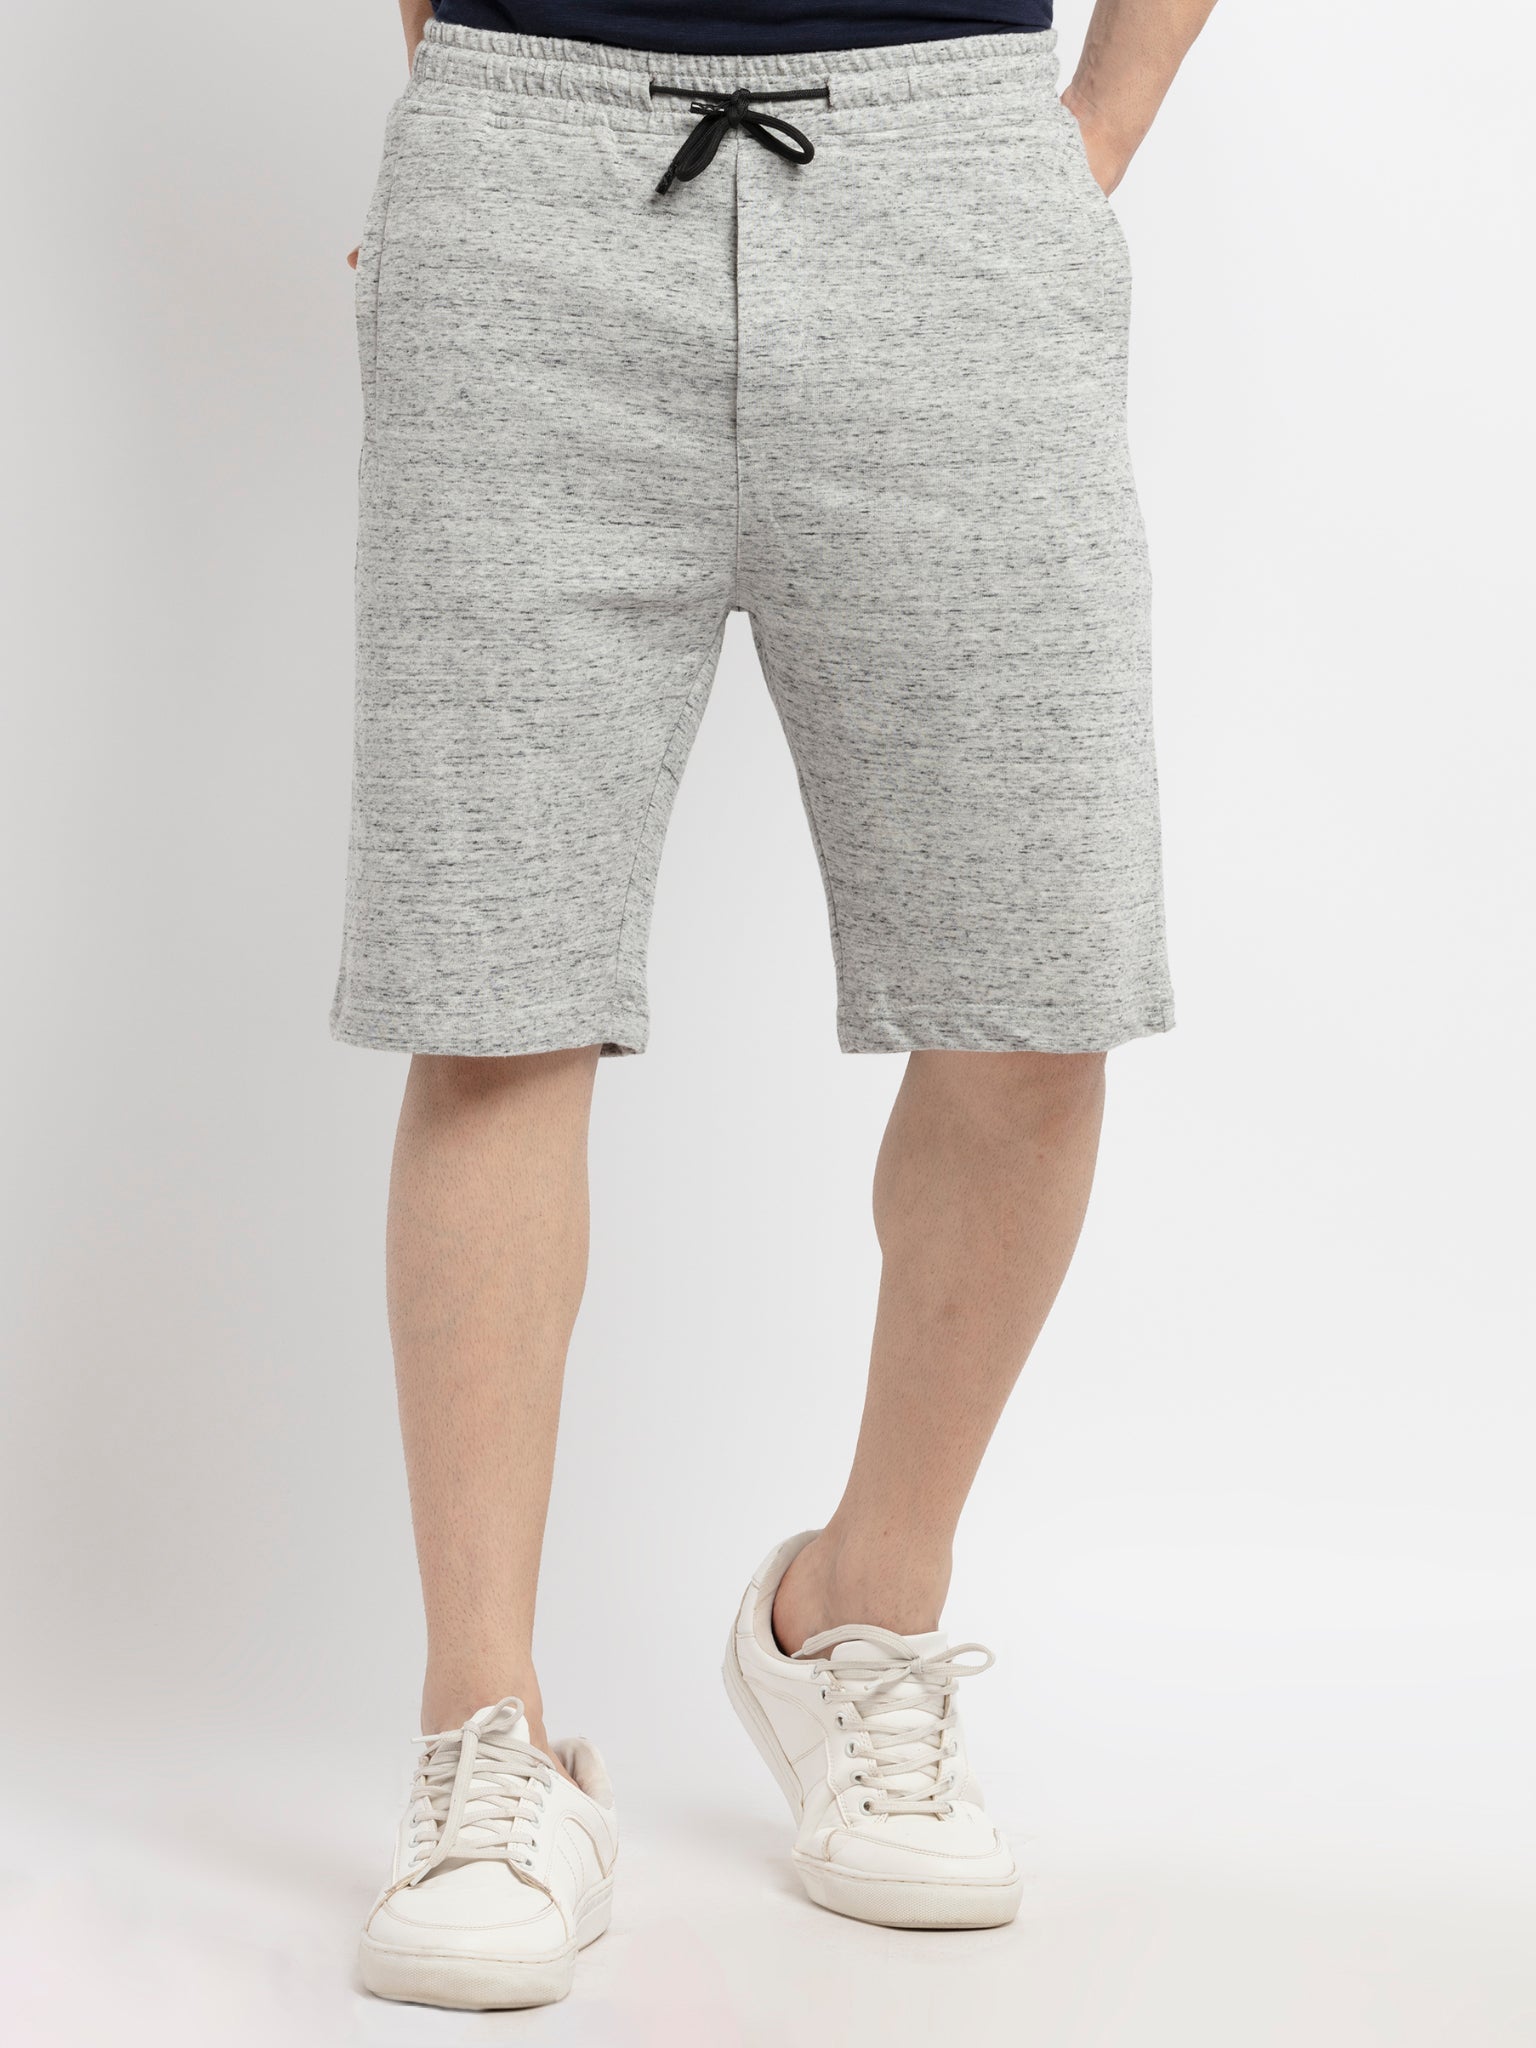 Status Quo |Men's Solid Regular Fit Shorts - S, M, L, XL, XXL